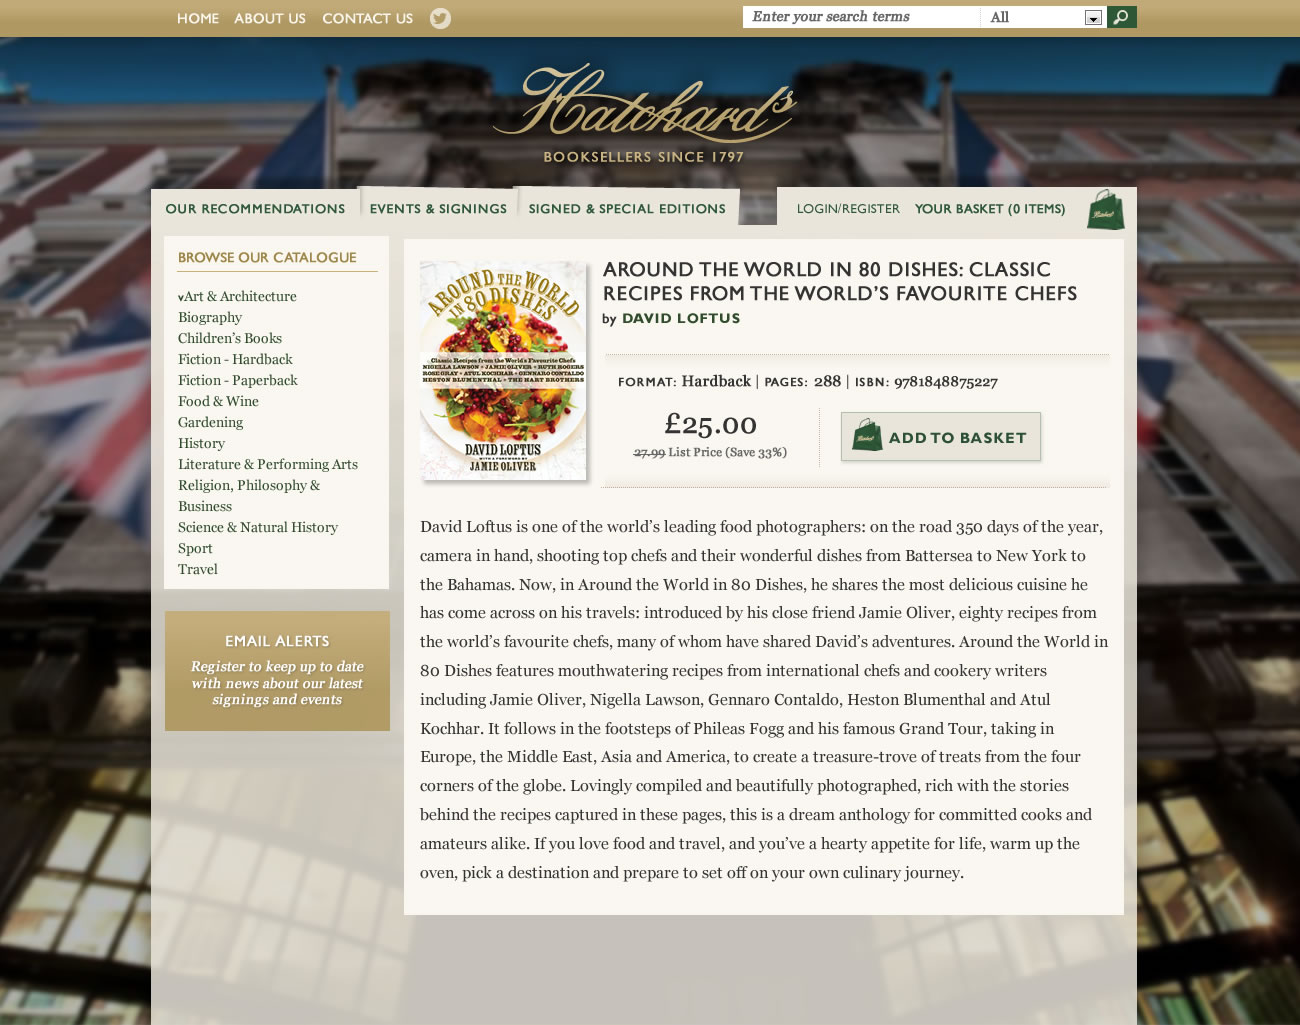 Hatchards website e-commerce page